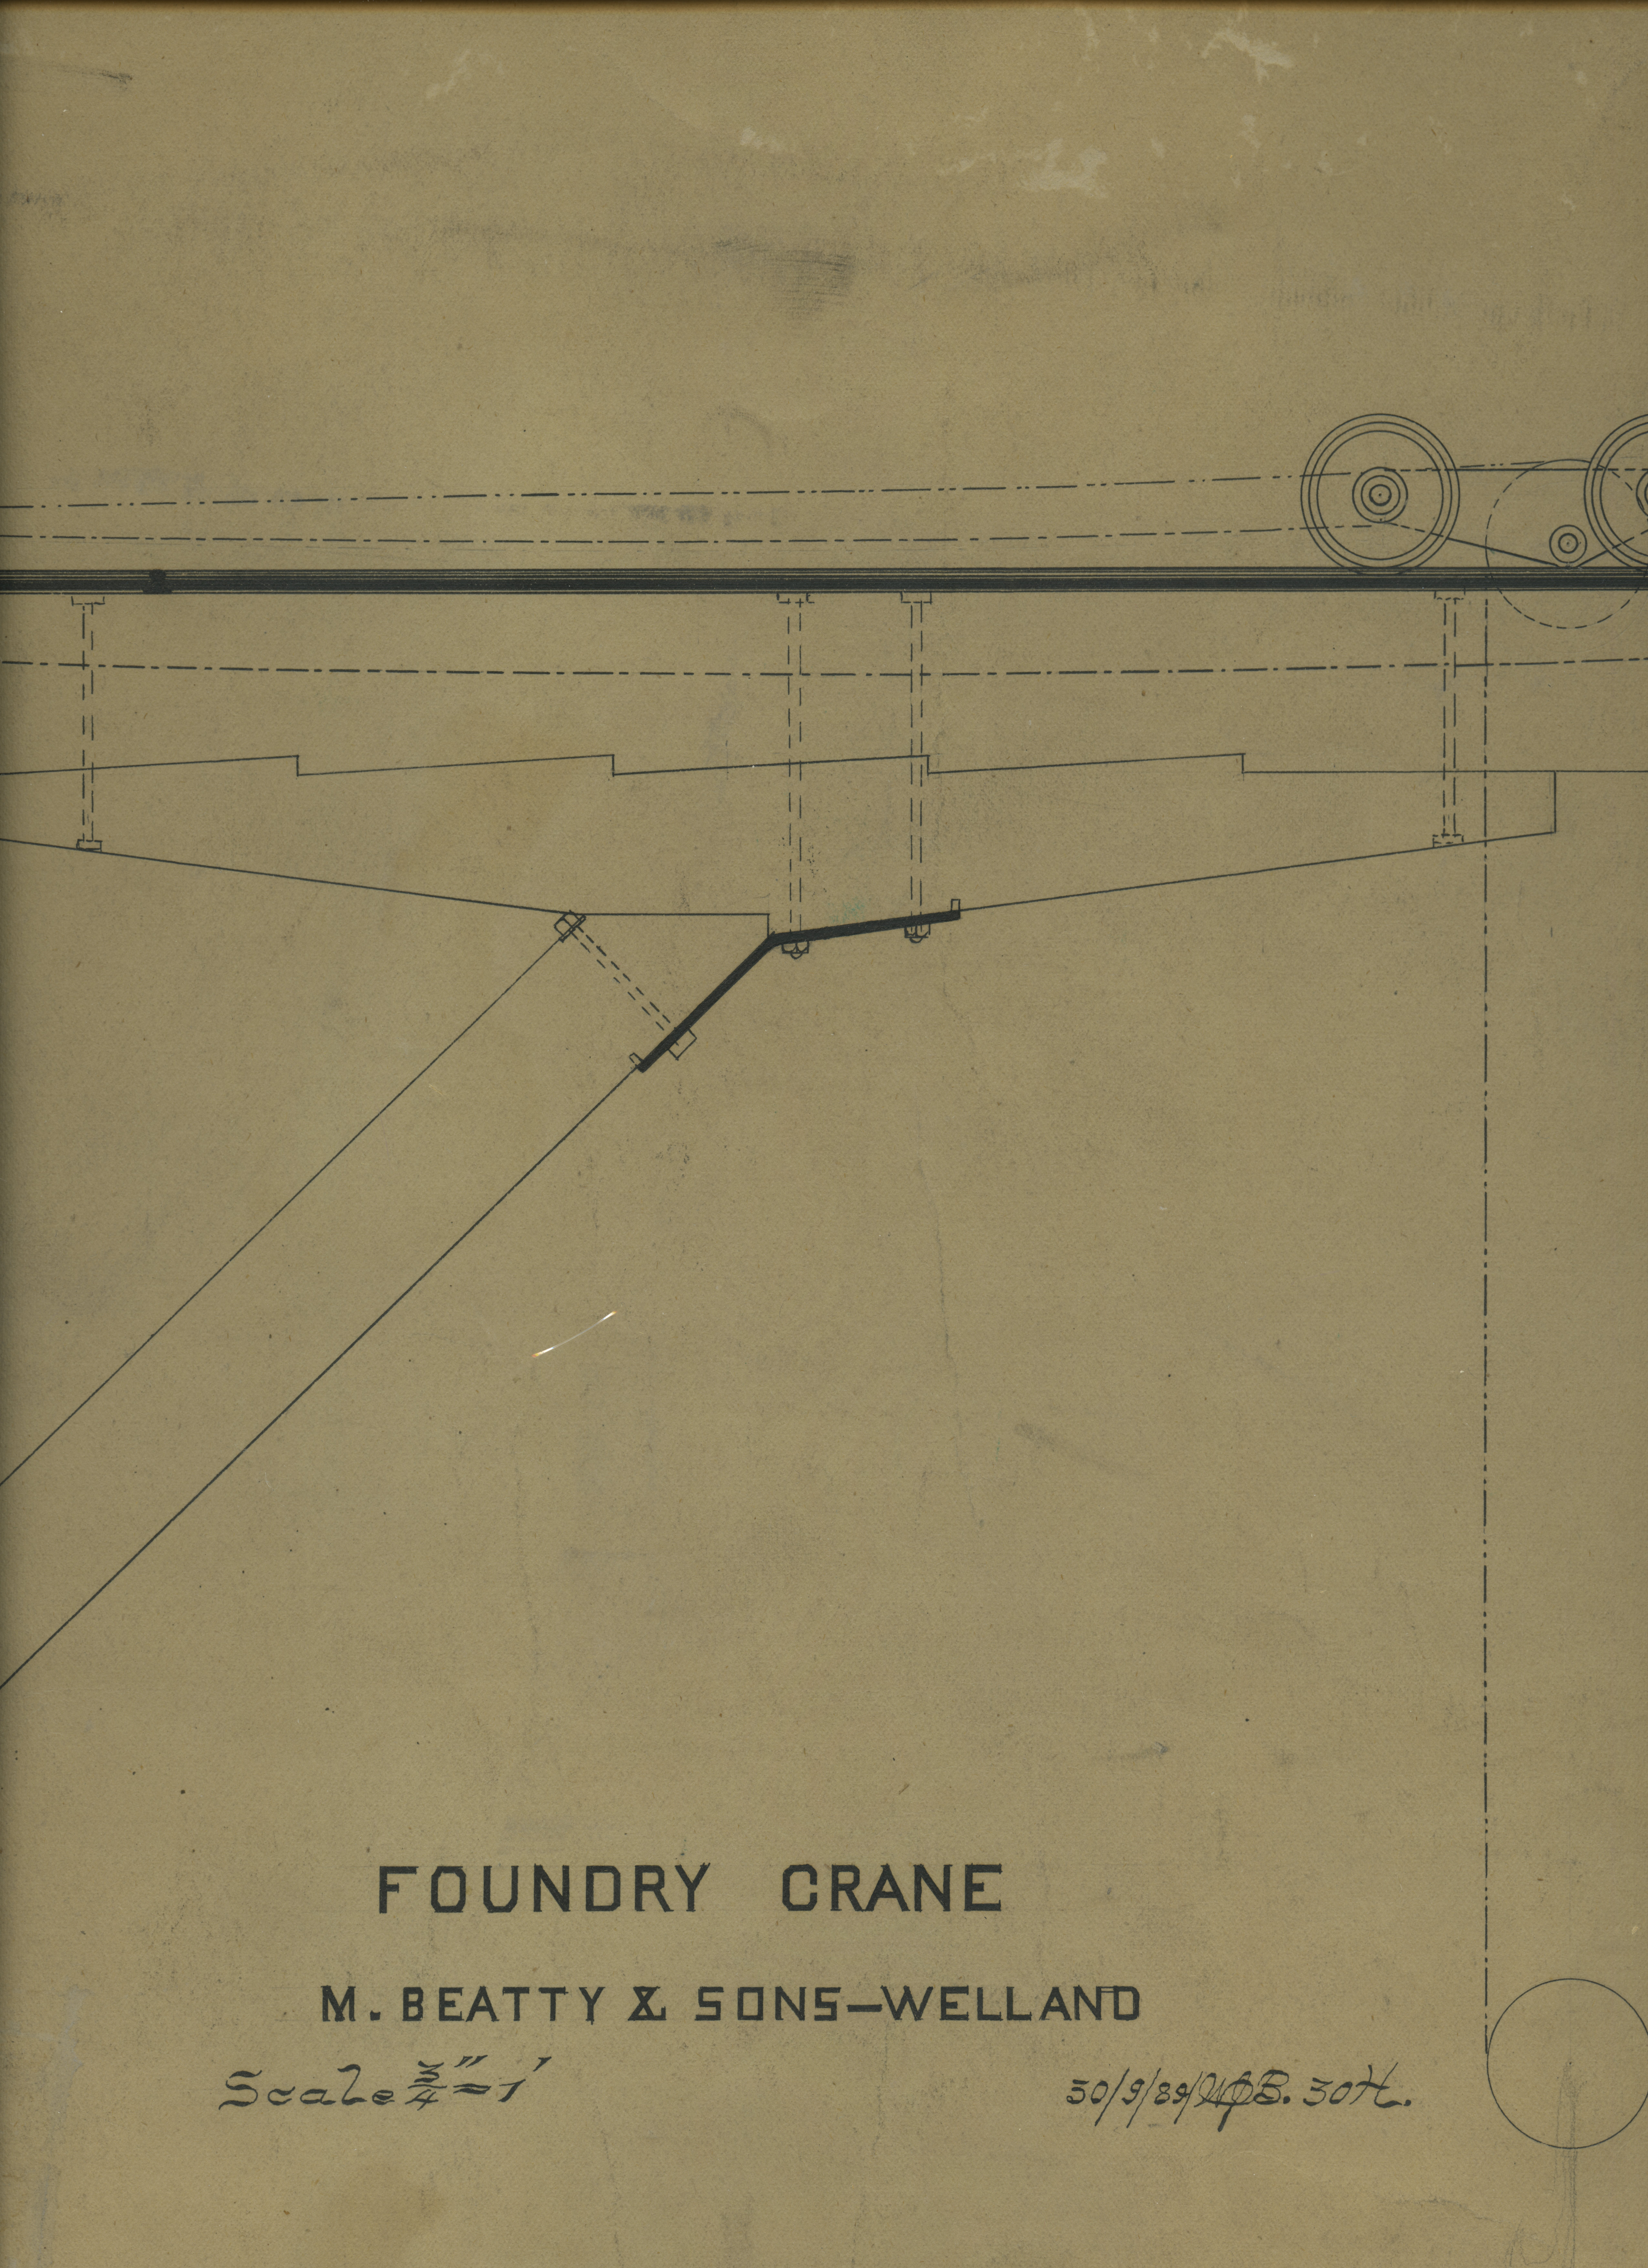 A sketch showing a foundry crane.